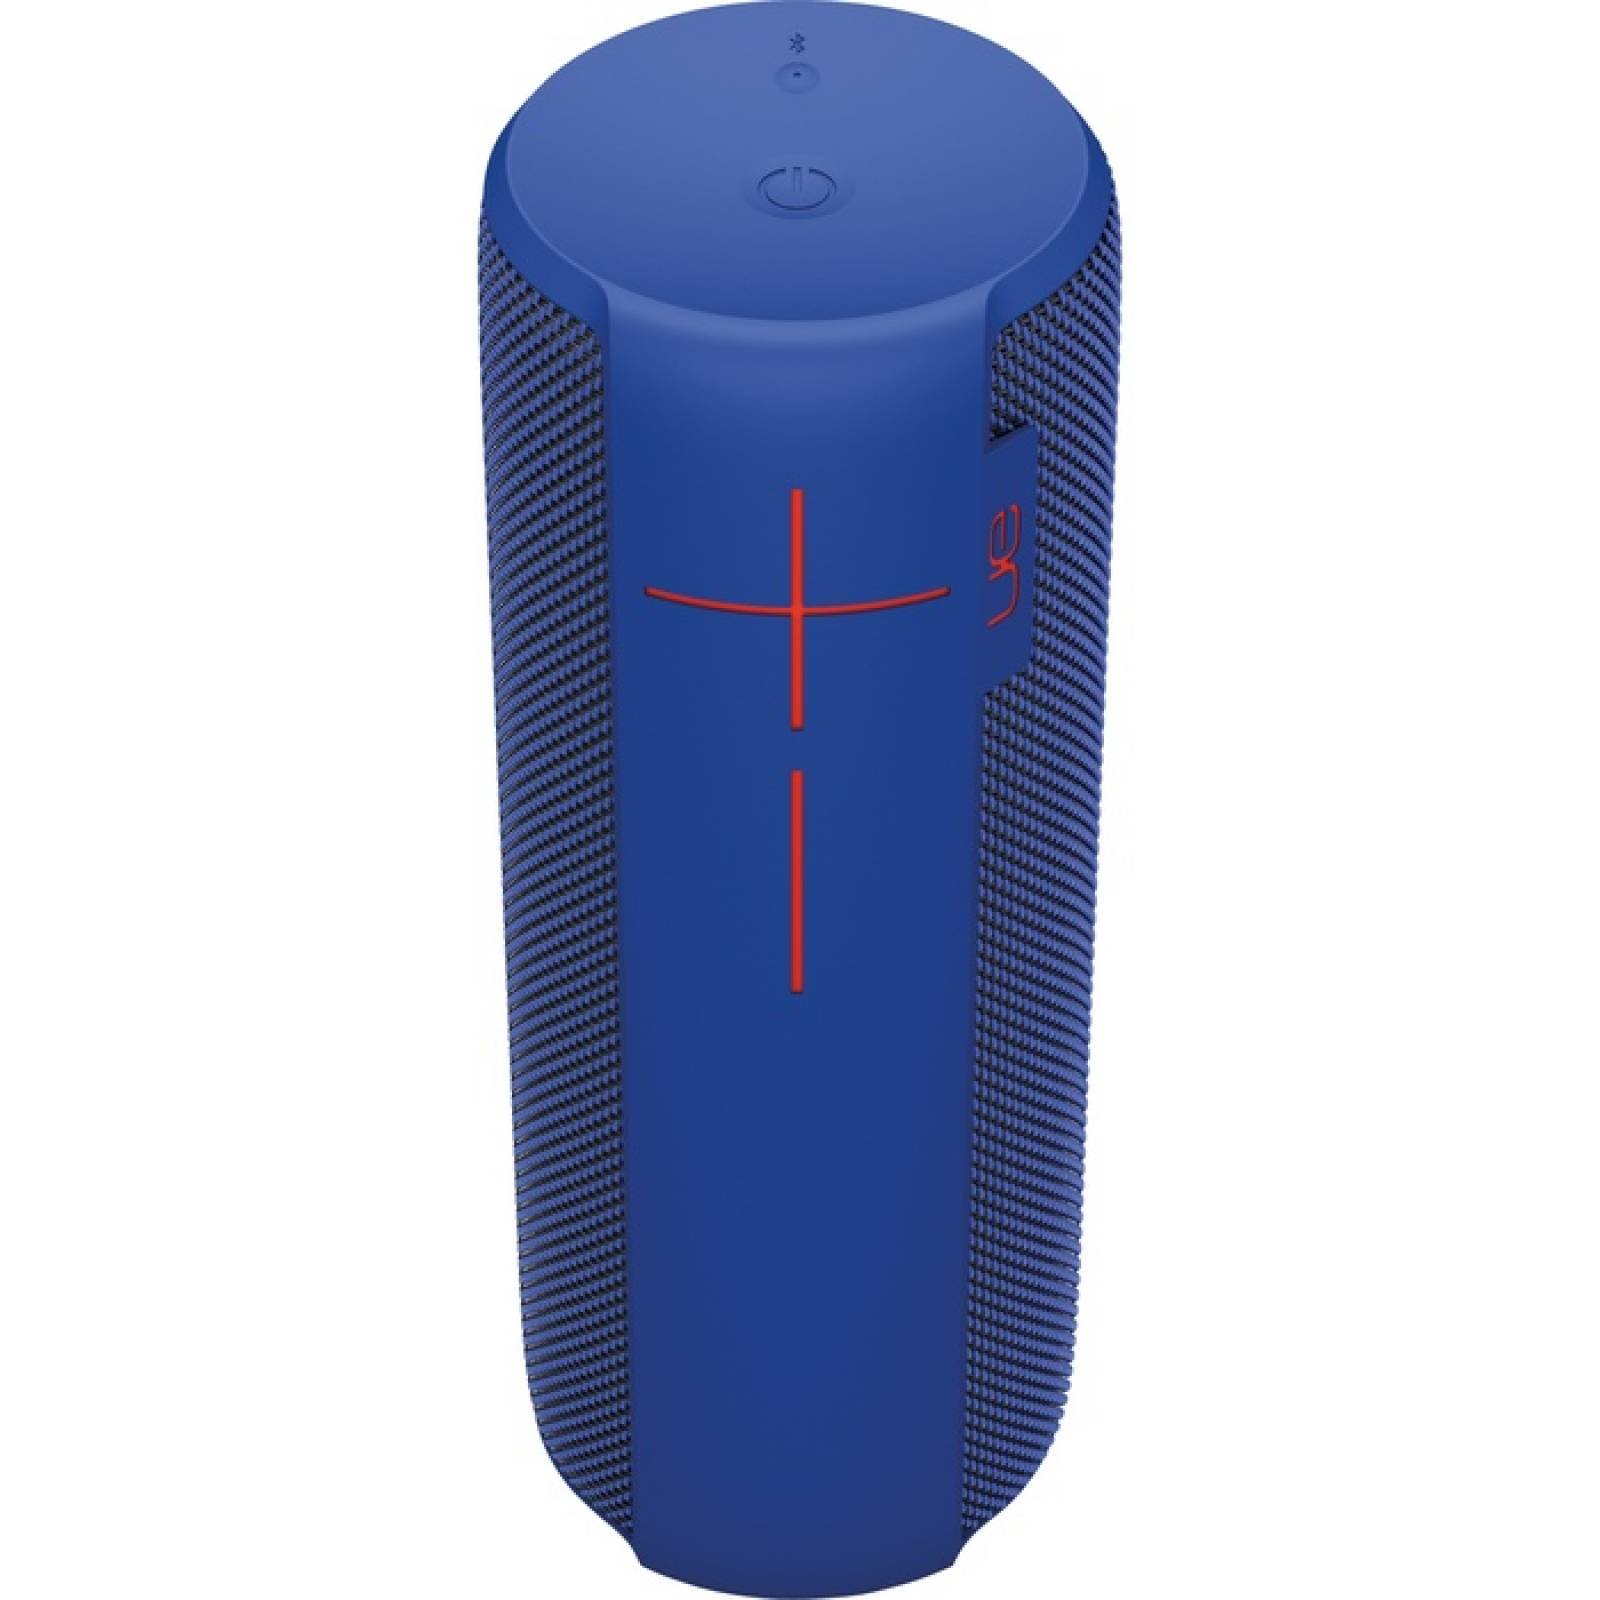 Sistema de altavoces MEGABOOM de Ultimate Ears  Altavoz (s) inalmbrico (s)  Porttil  Batera recargable  Azul